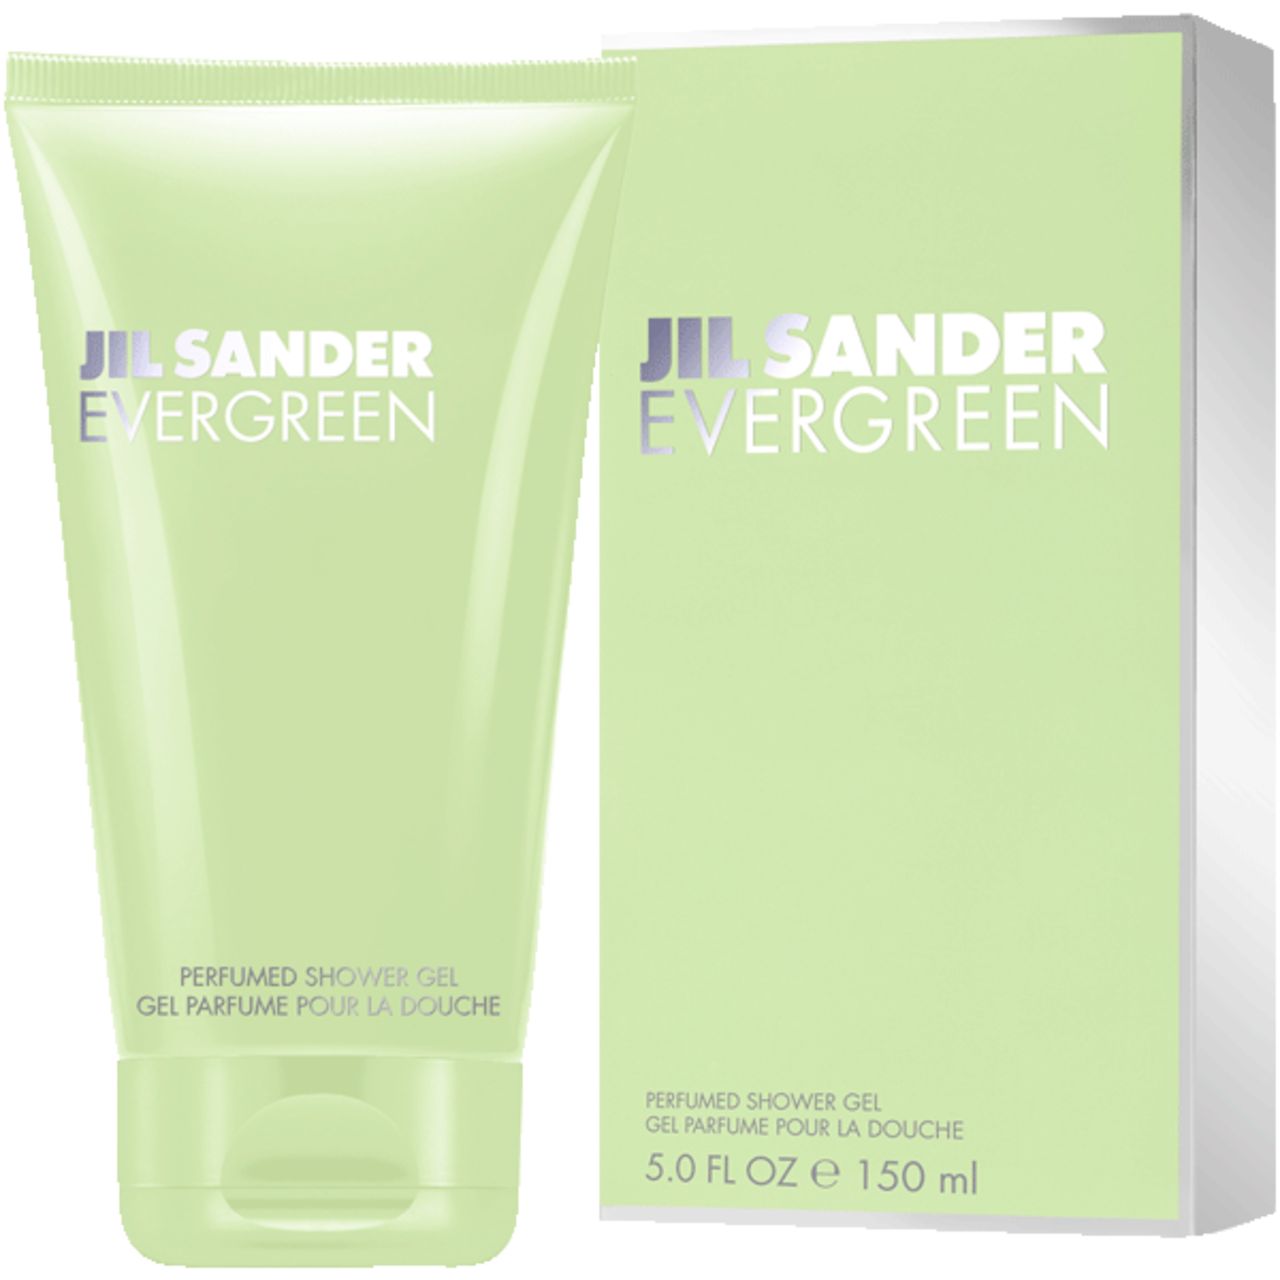 Jil Sander, Evergreen Perfumed Shower Gel